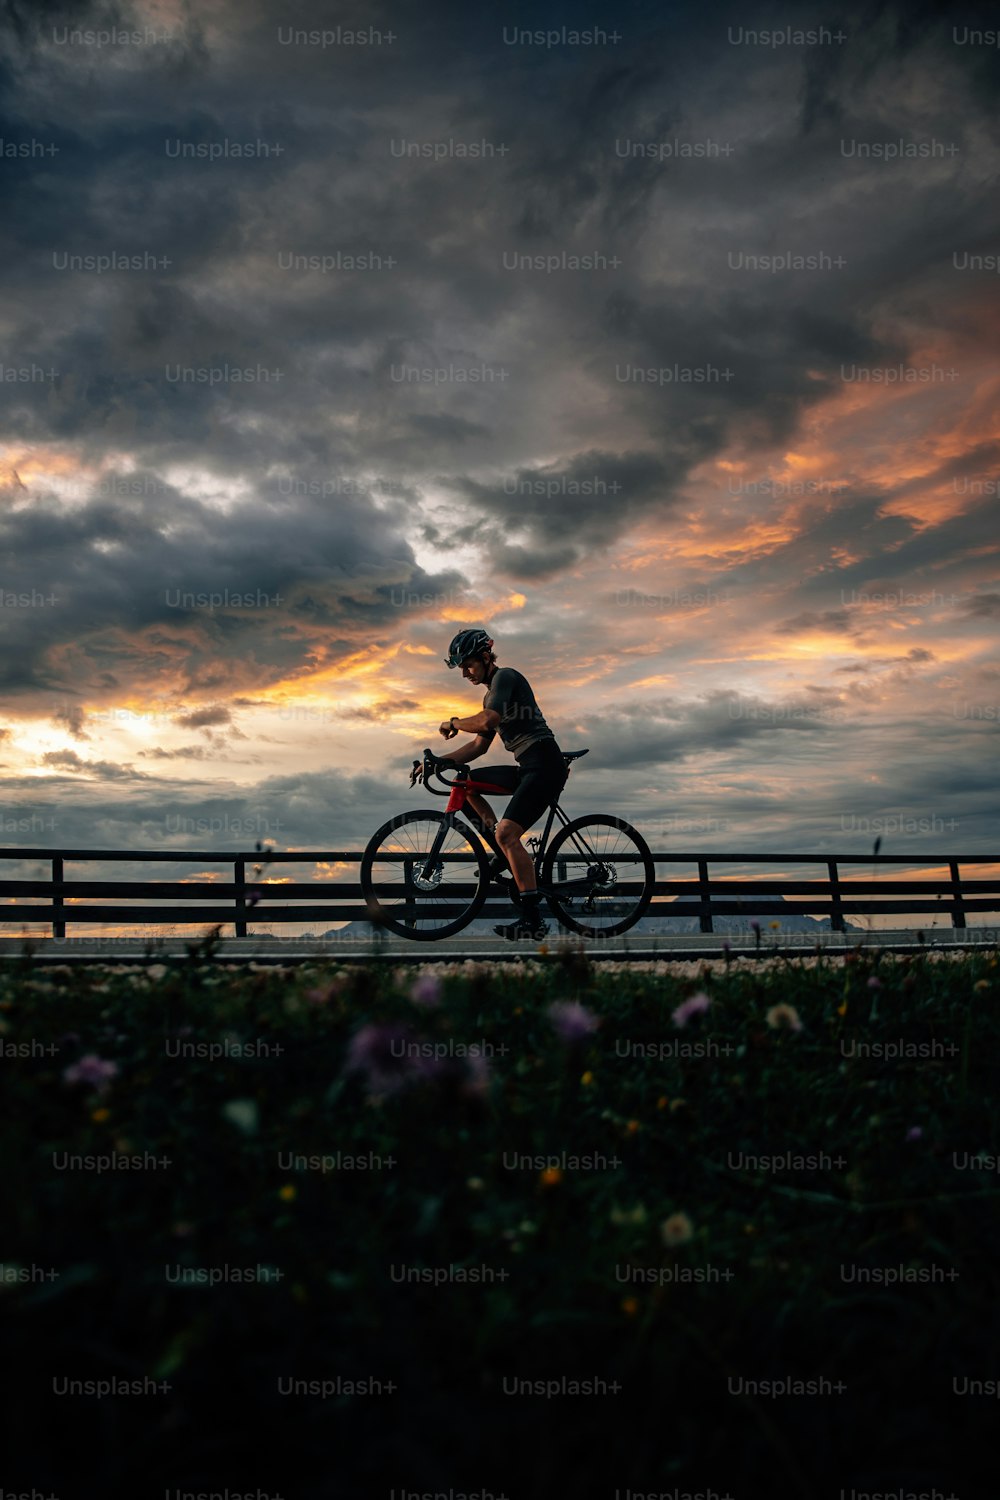 a man riding a bike down a road under a cloudy sky